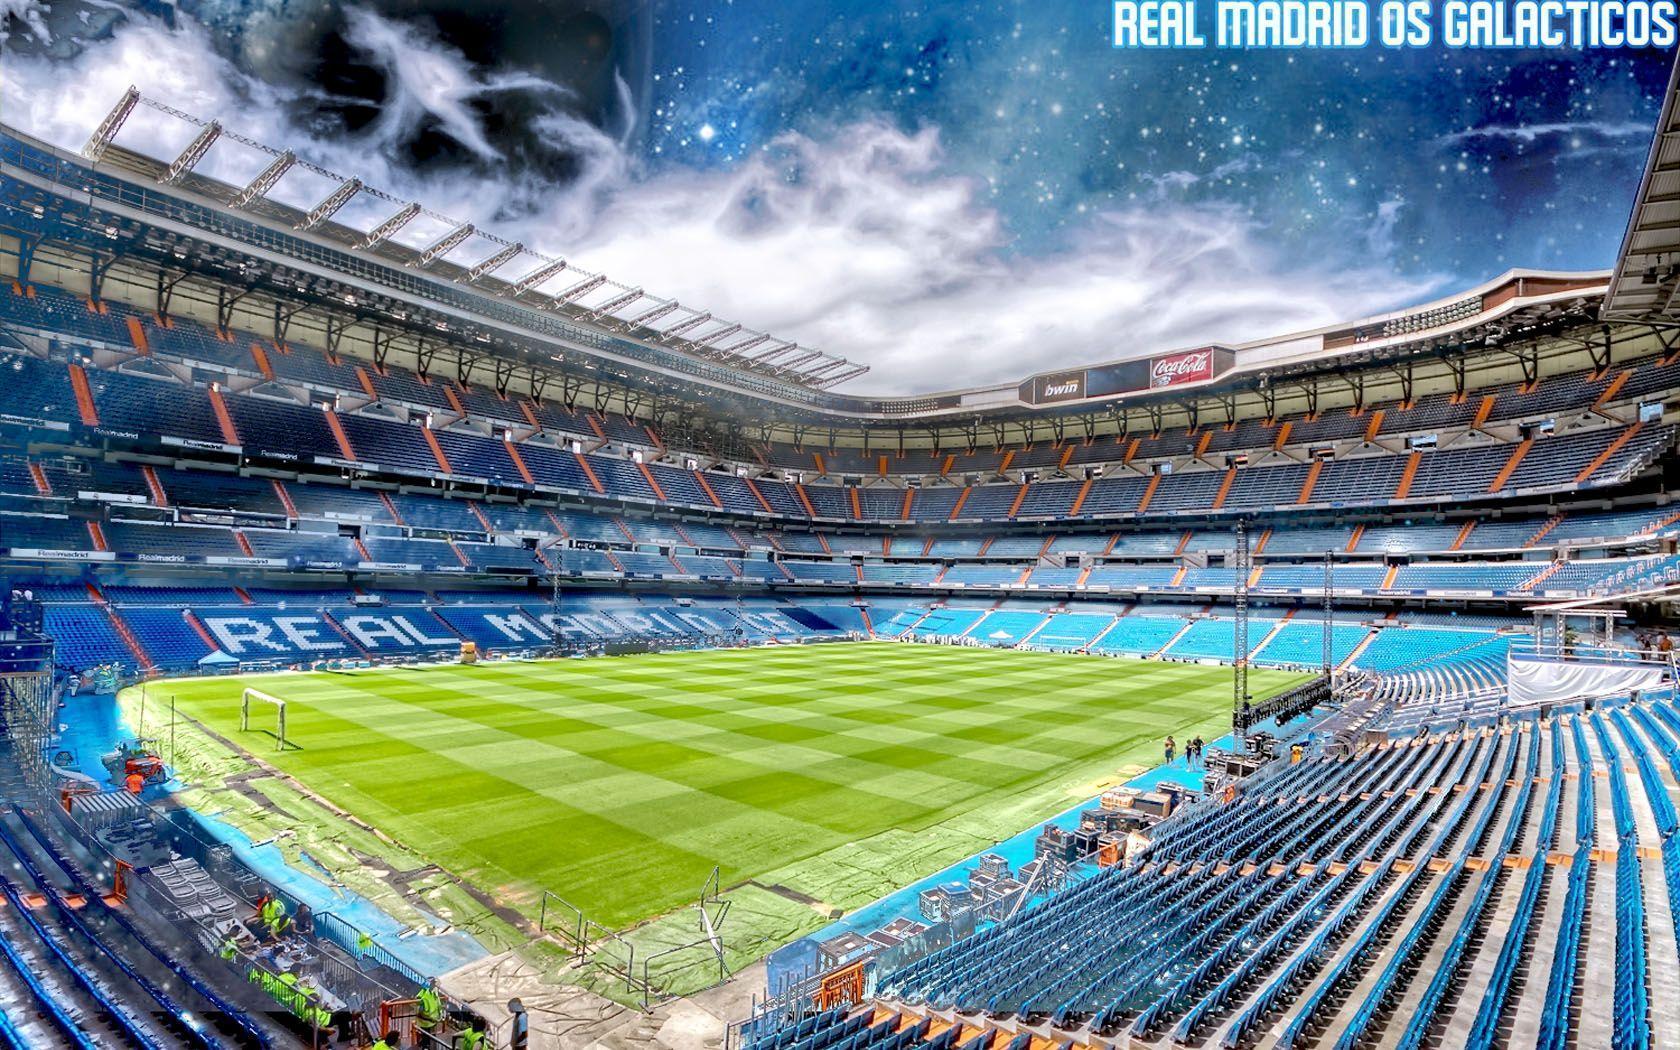 Real Madrid Santiago Bernabeu stadium